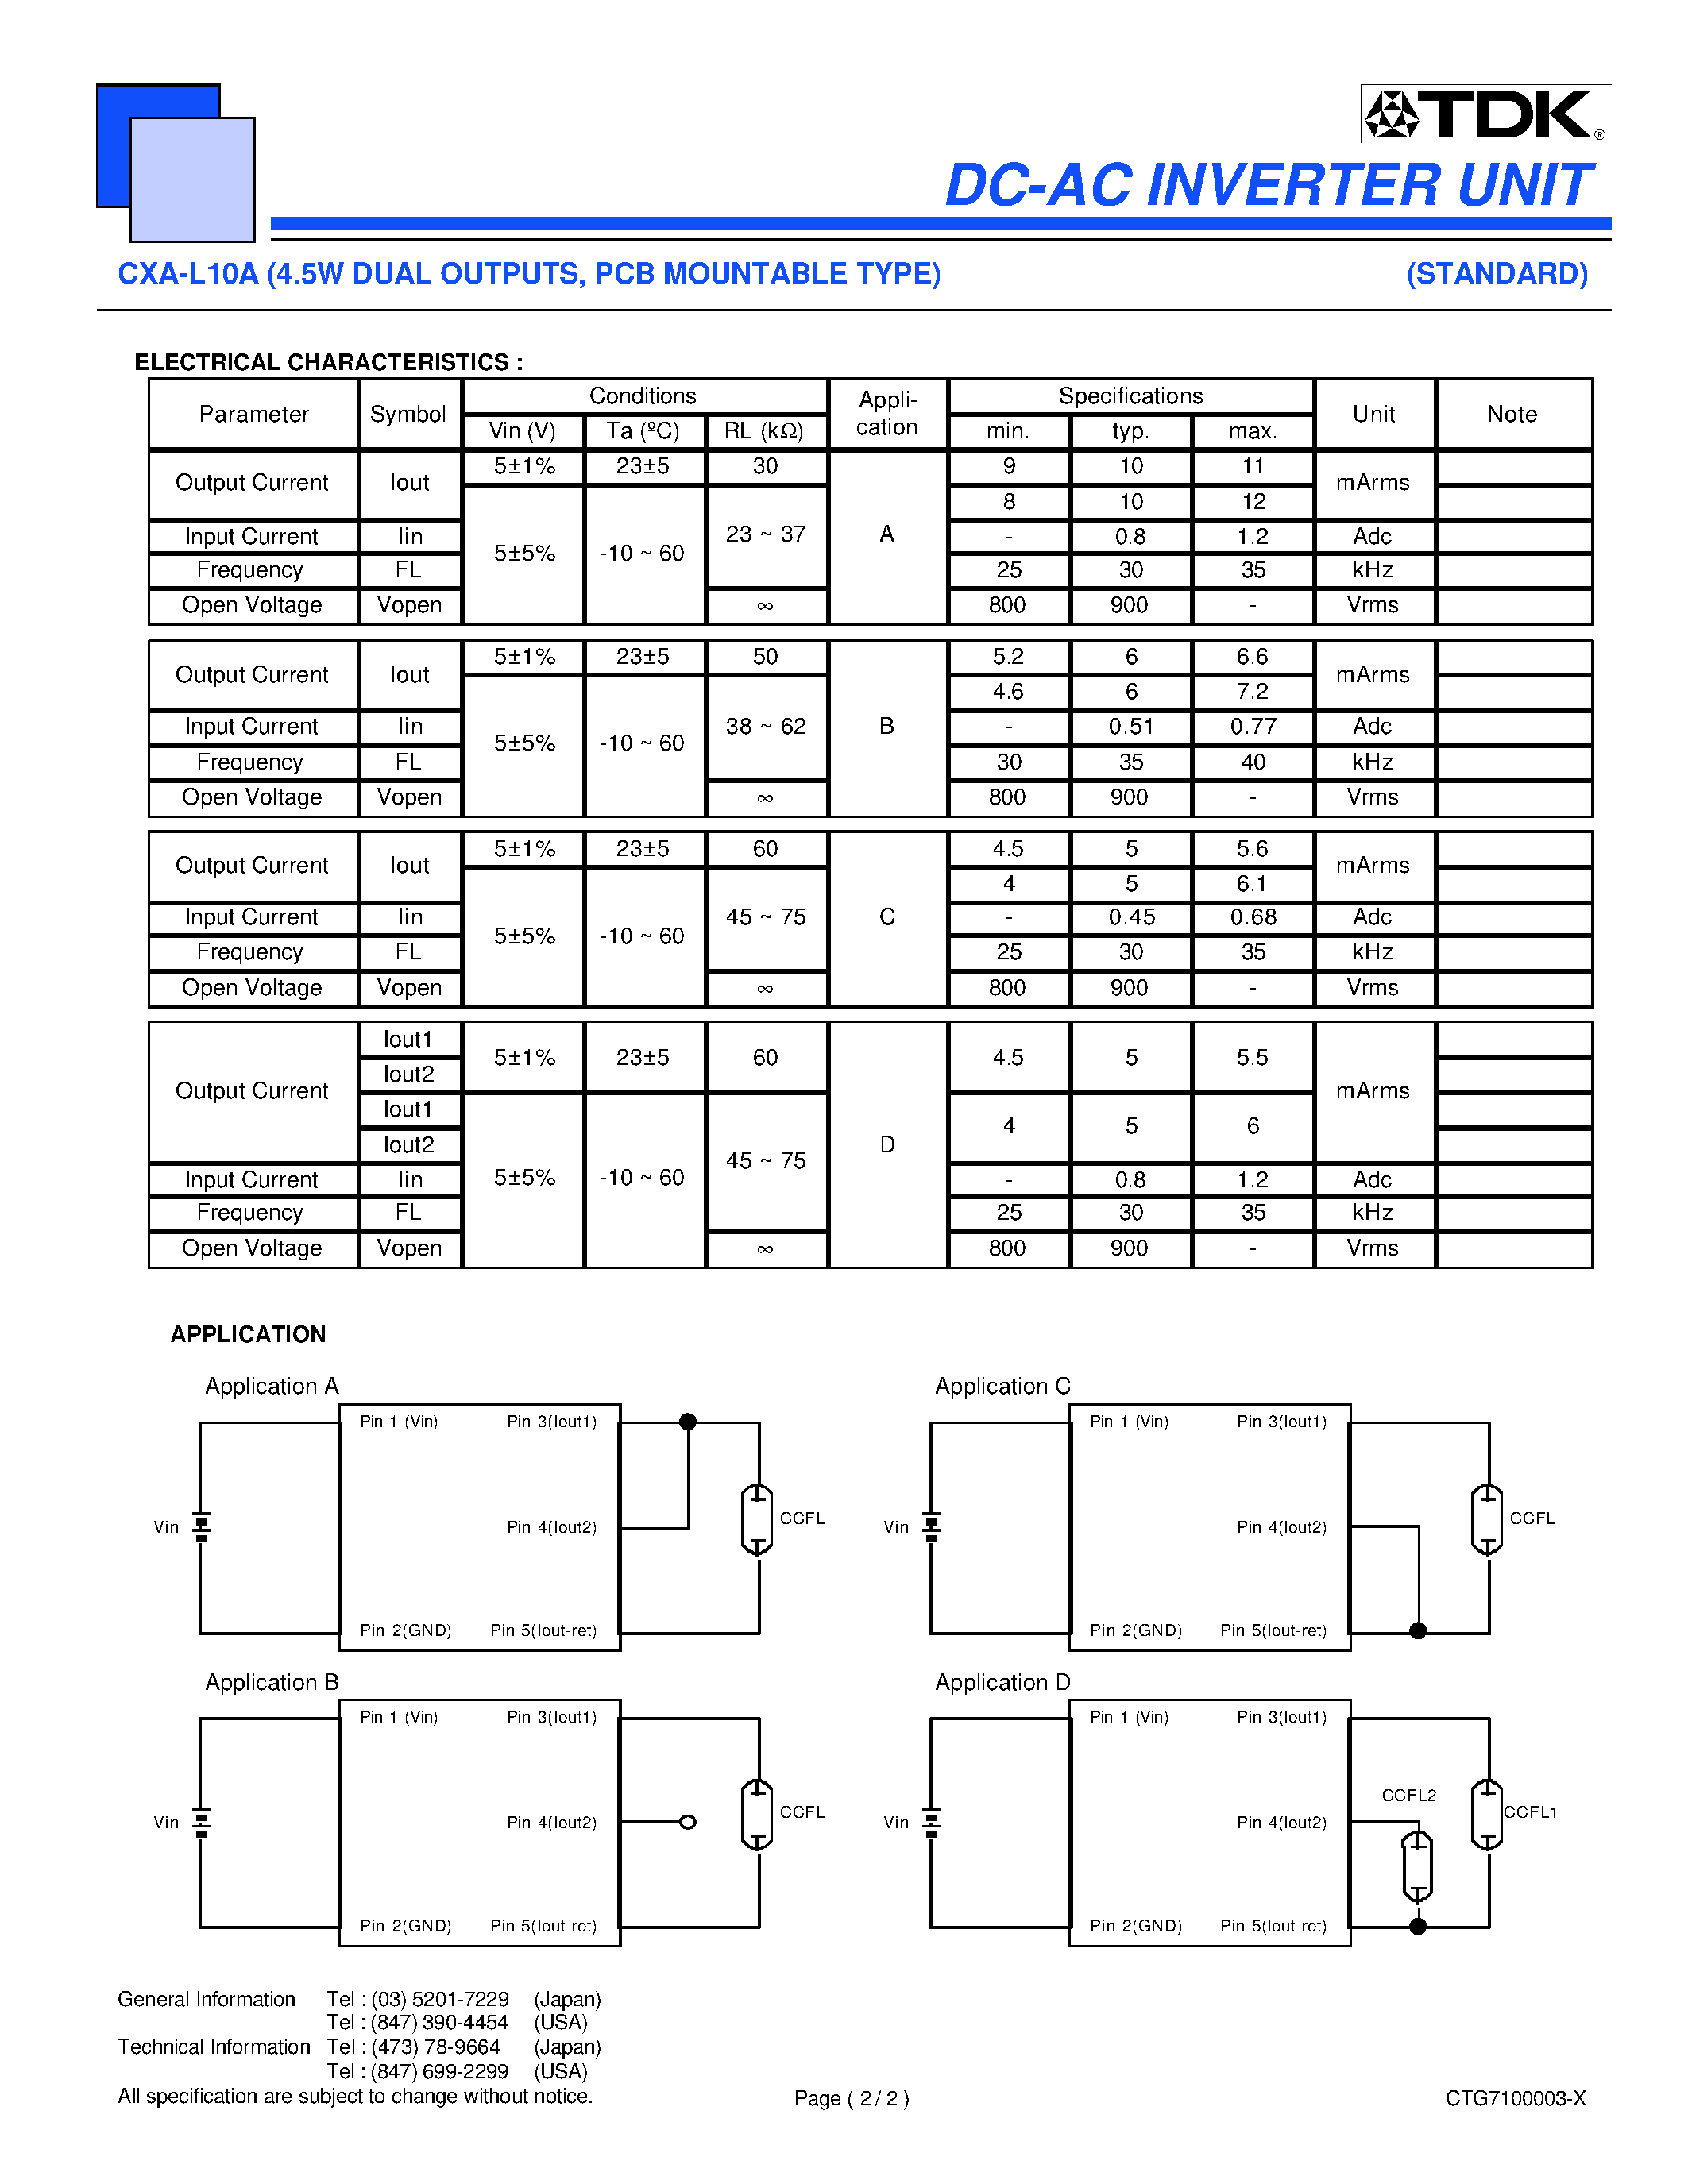 Datasheet CXA-L10A - DC-AC INVERTER UNIT (4.5W DUAL OUTPUTS/ PCB MOUNTABLE TYPE) page 2